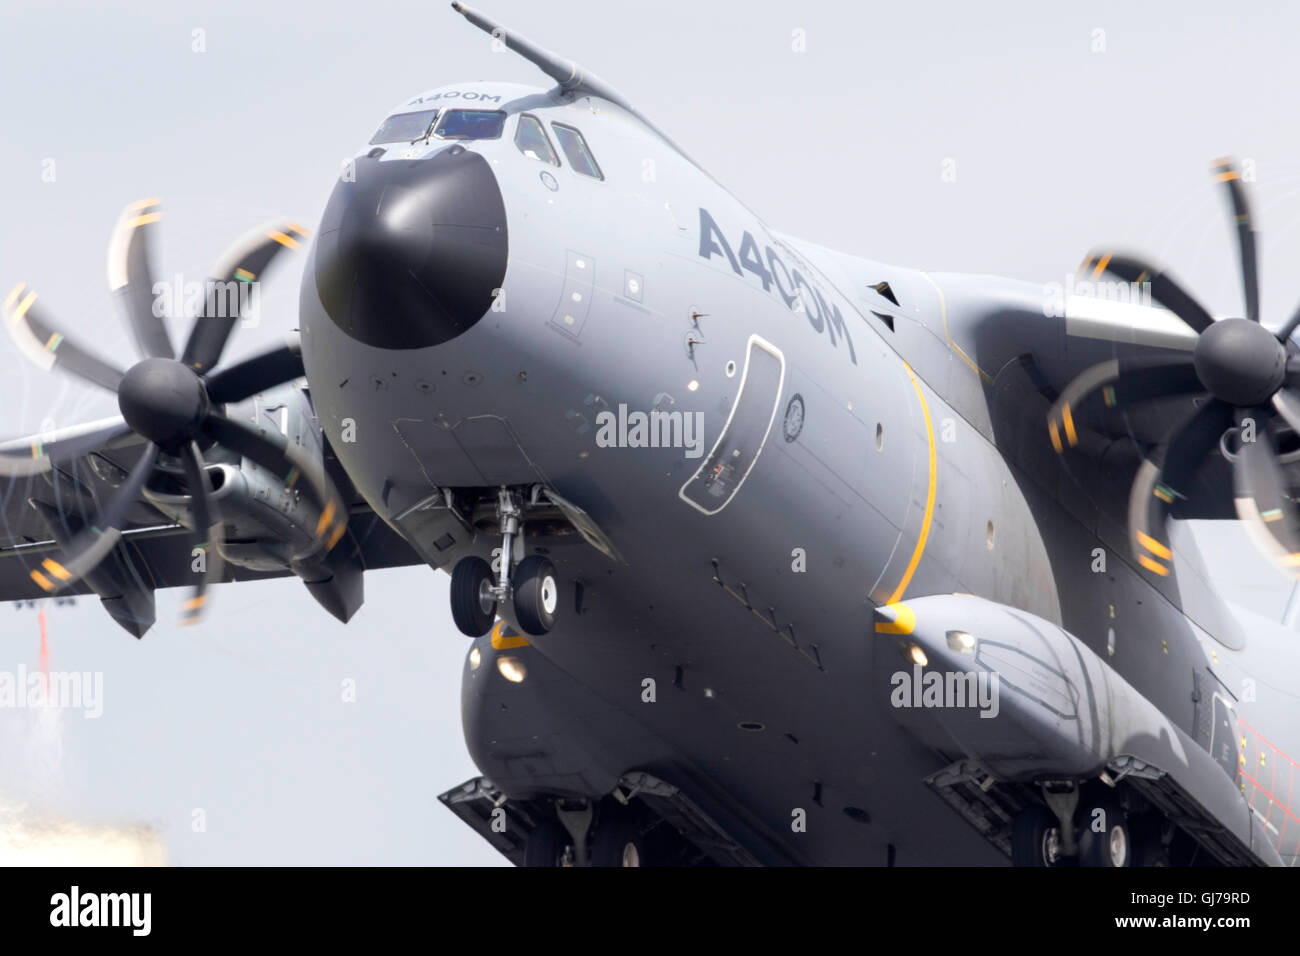 Airbus A400M military transport aircraft at RIAT Royal International Air Tattoo RAF Fairford July 2016 Stock Photo